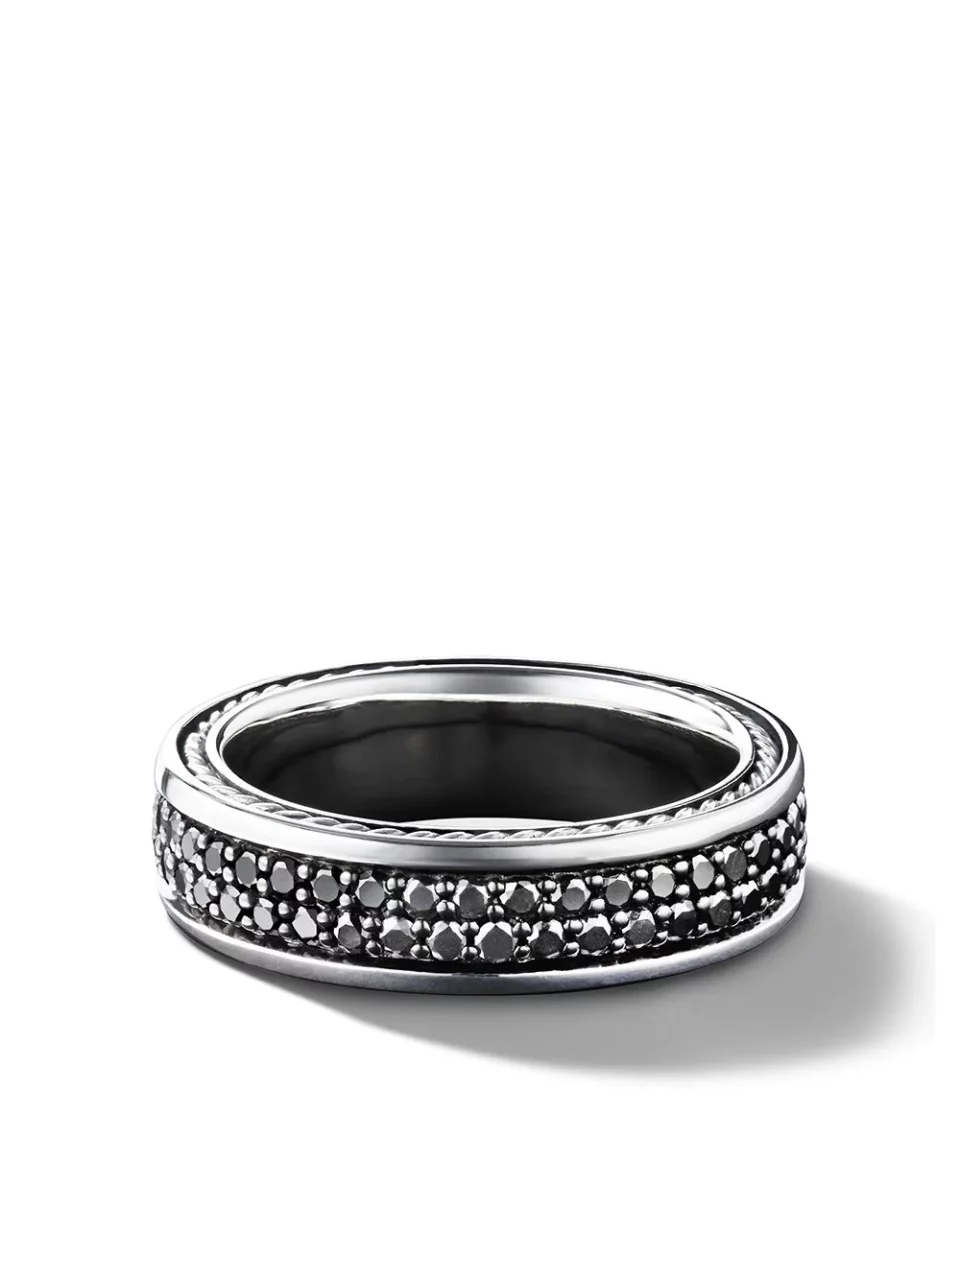 Streamline silver ring from David Yurman